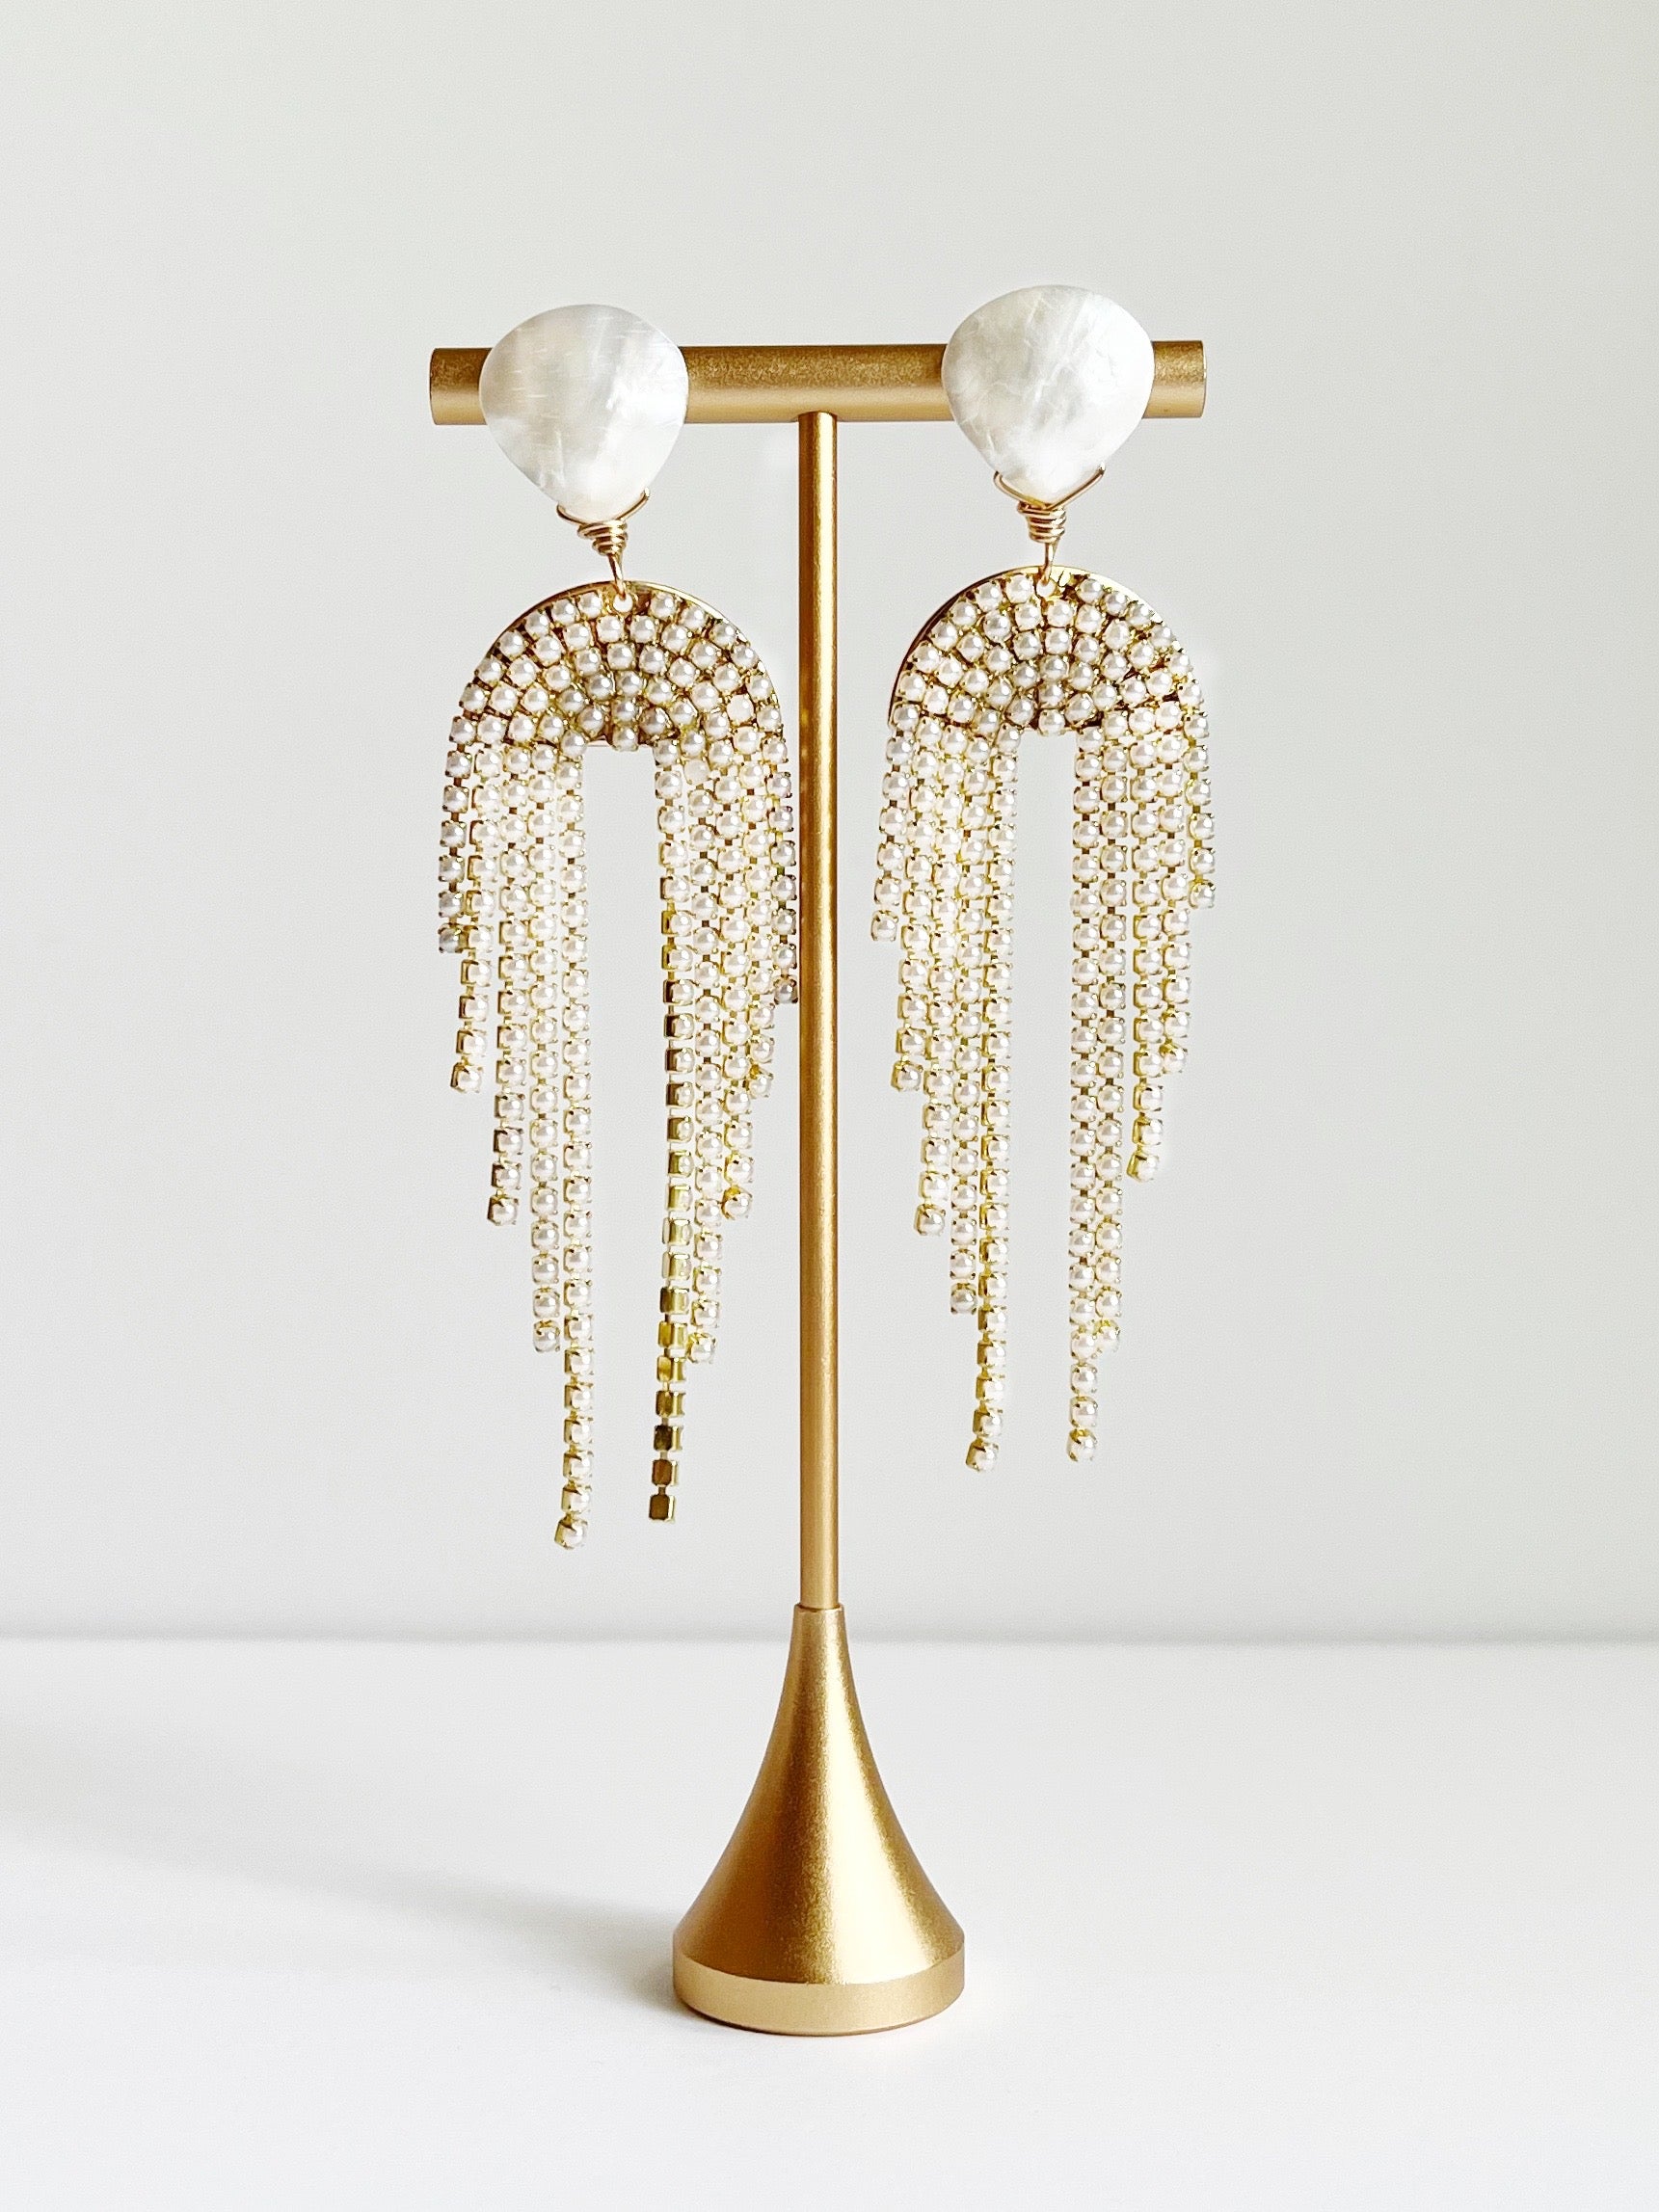 Pearl Tassel Fringe Statement Earrings displayed on gold earring tstand